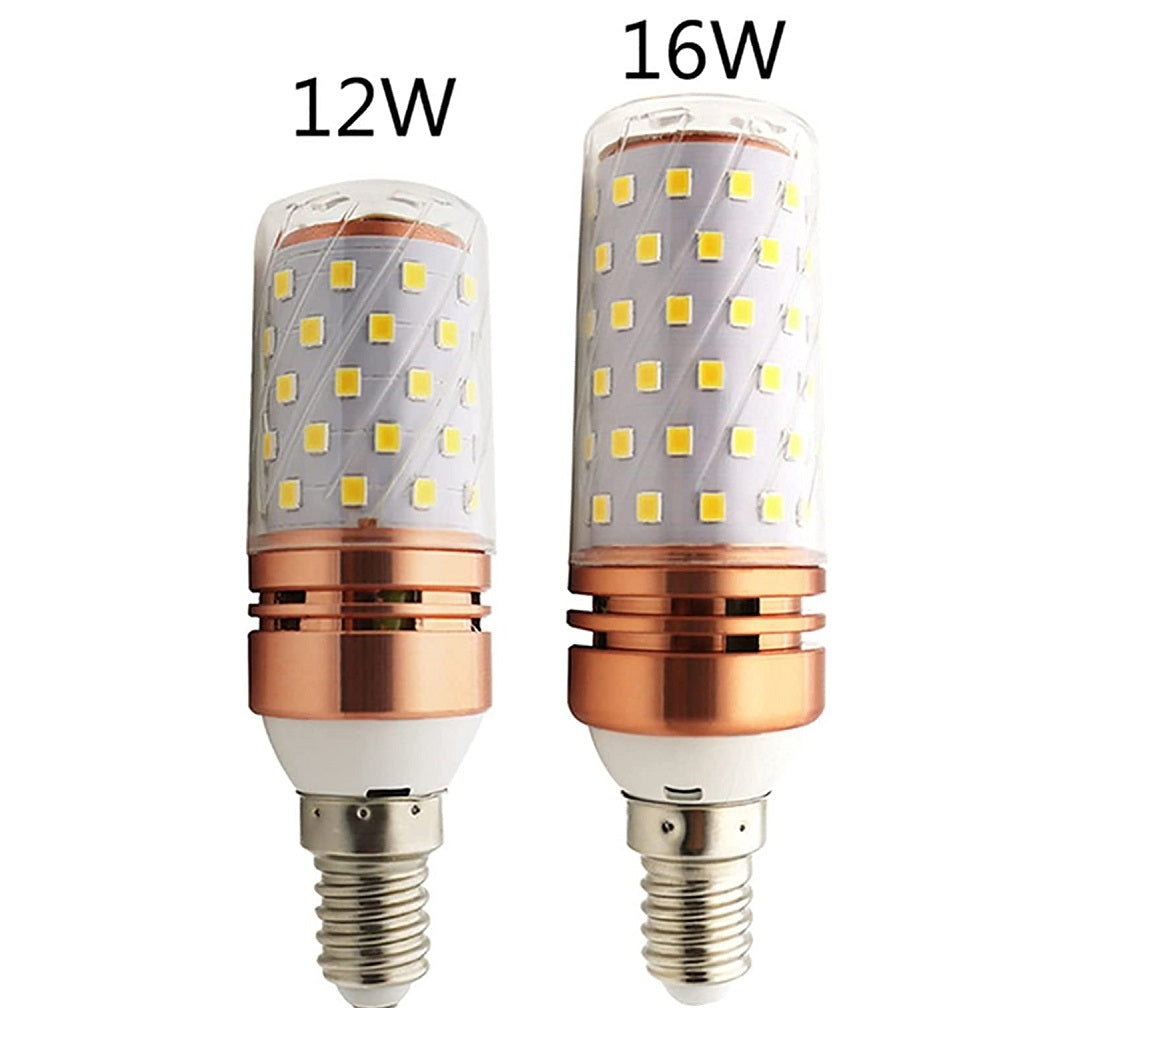 Bec LED E14 16W Corn / 3 functii lumina / Echivalent 120W